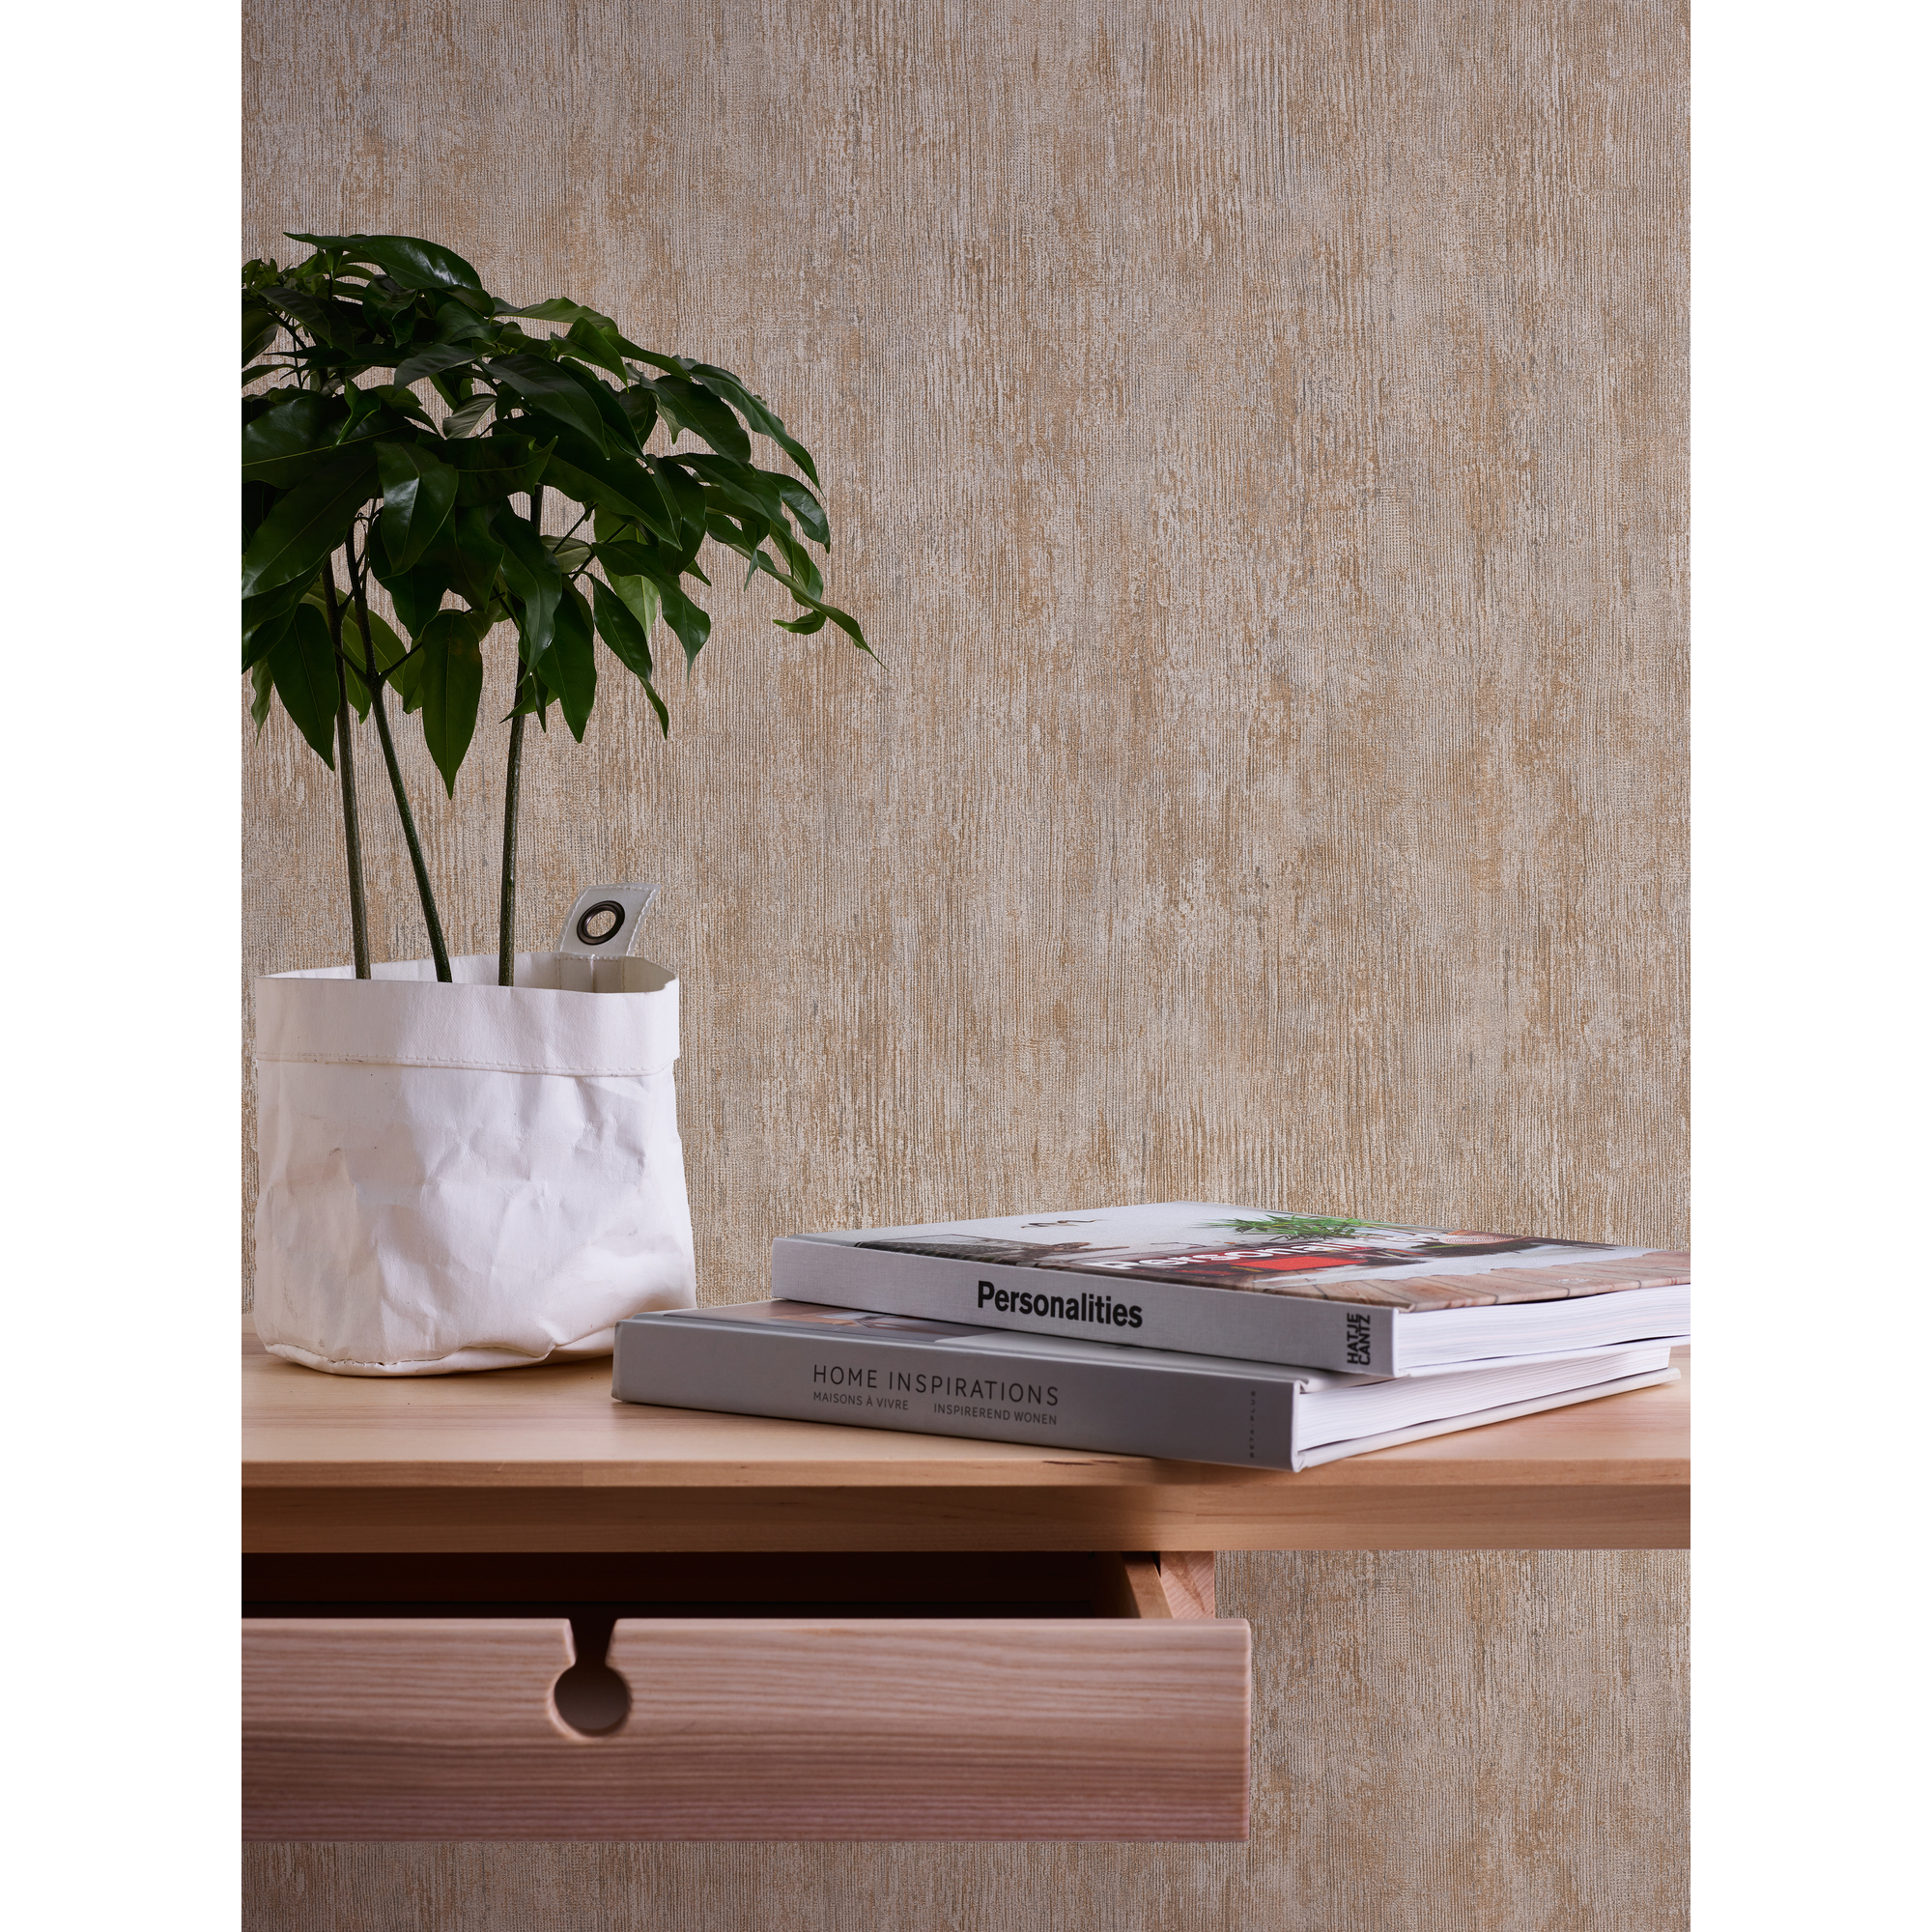 Vliestapete 'Industrial' Rillen beige/grau 53 x 1005 cm + product picture